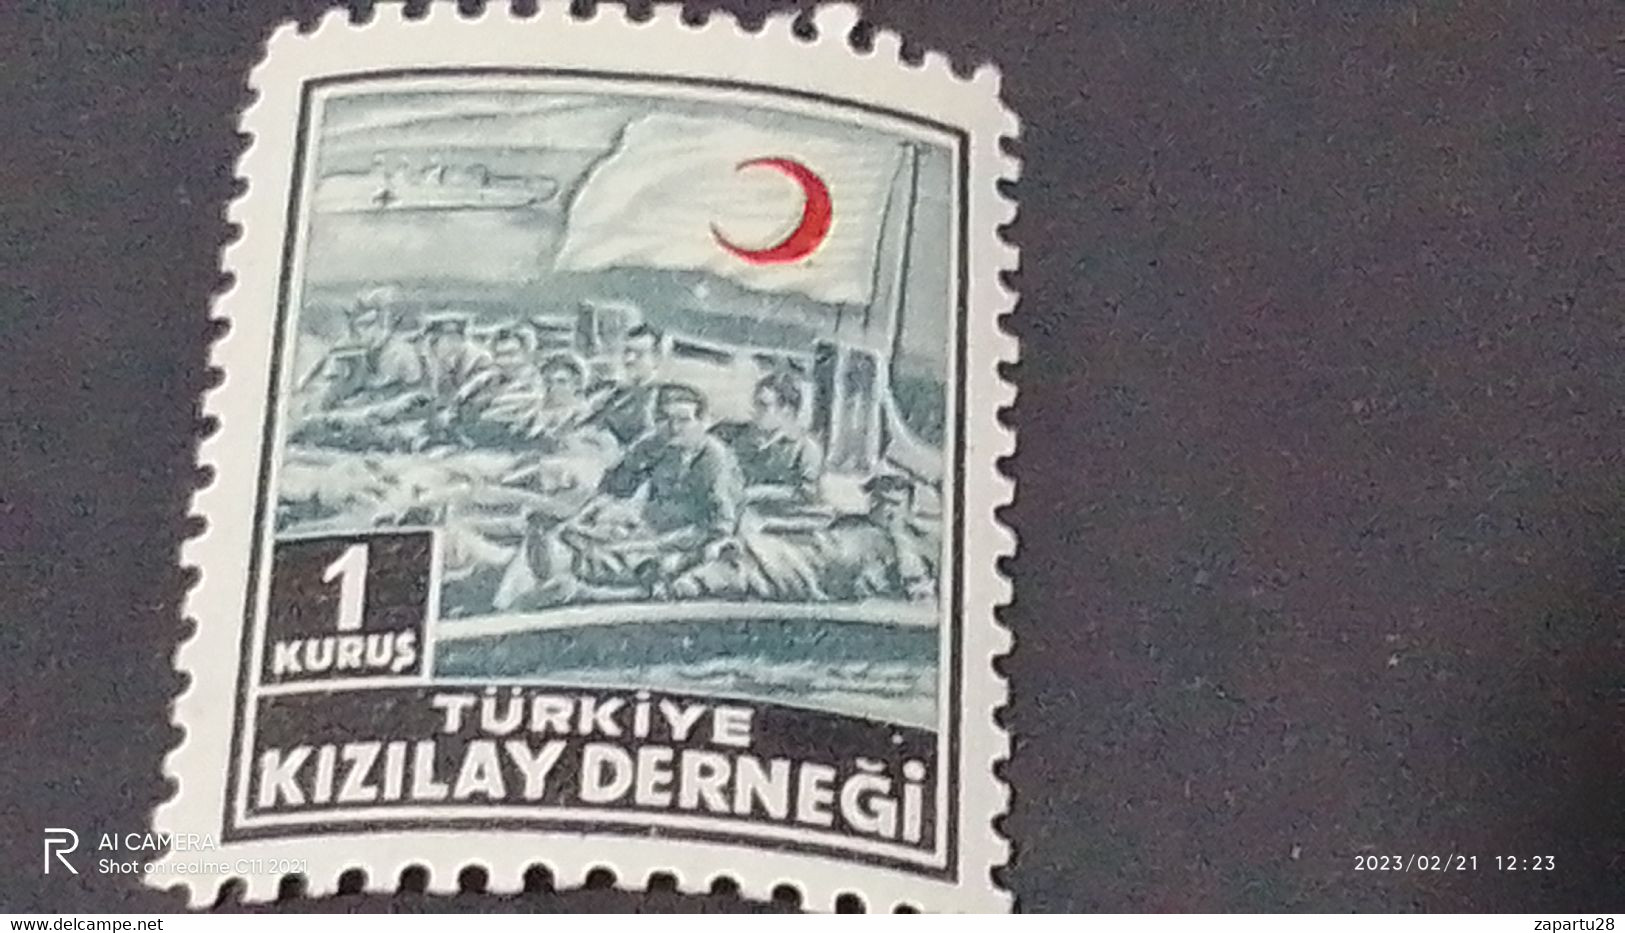 TÜRKEY--YARDIM PULLARI-1950-60  KIZILAY DERNEĞİ  1K  DAMGASIZ - Charity Stamps